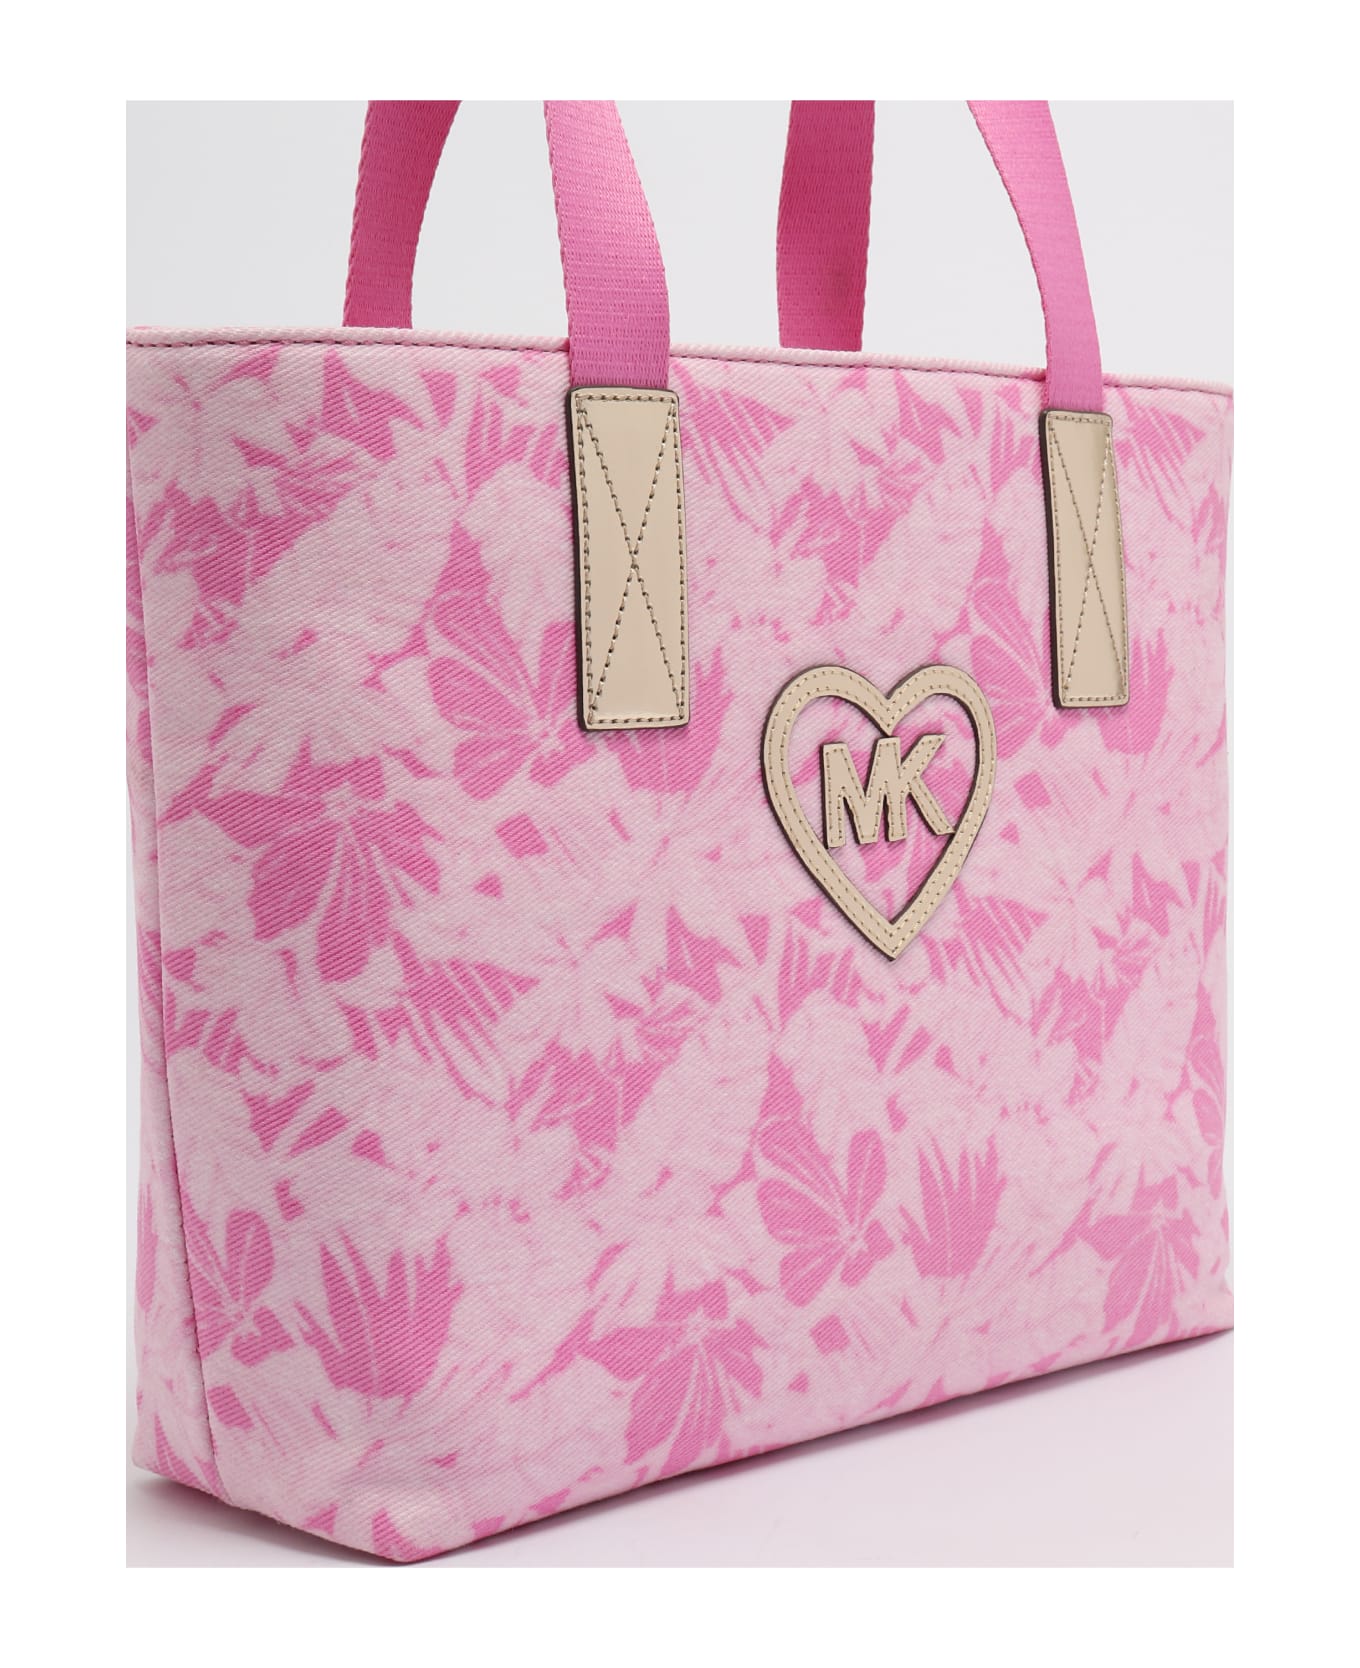 Michael Kors Shopping Bag Shopping Bag - ROSA-FUCSIA アクセサリー＆ギフト